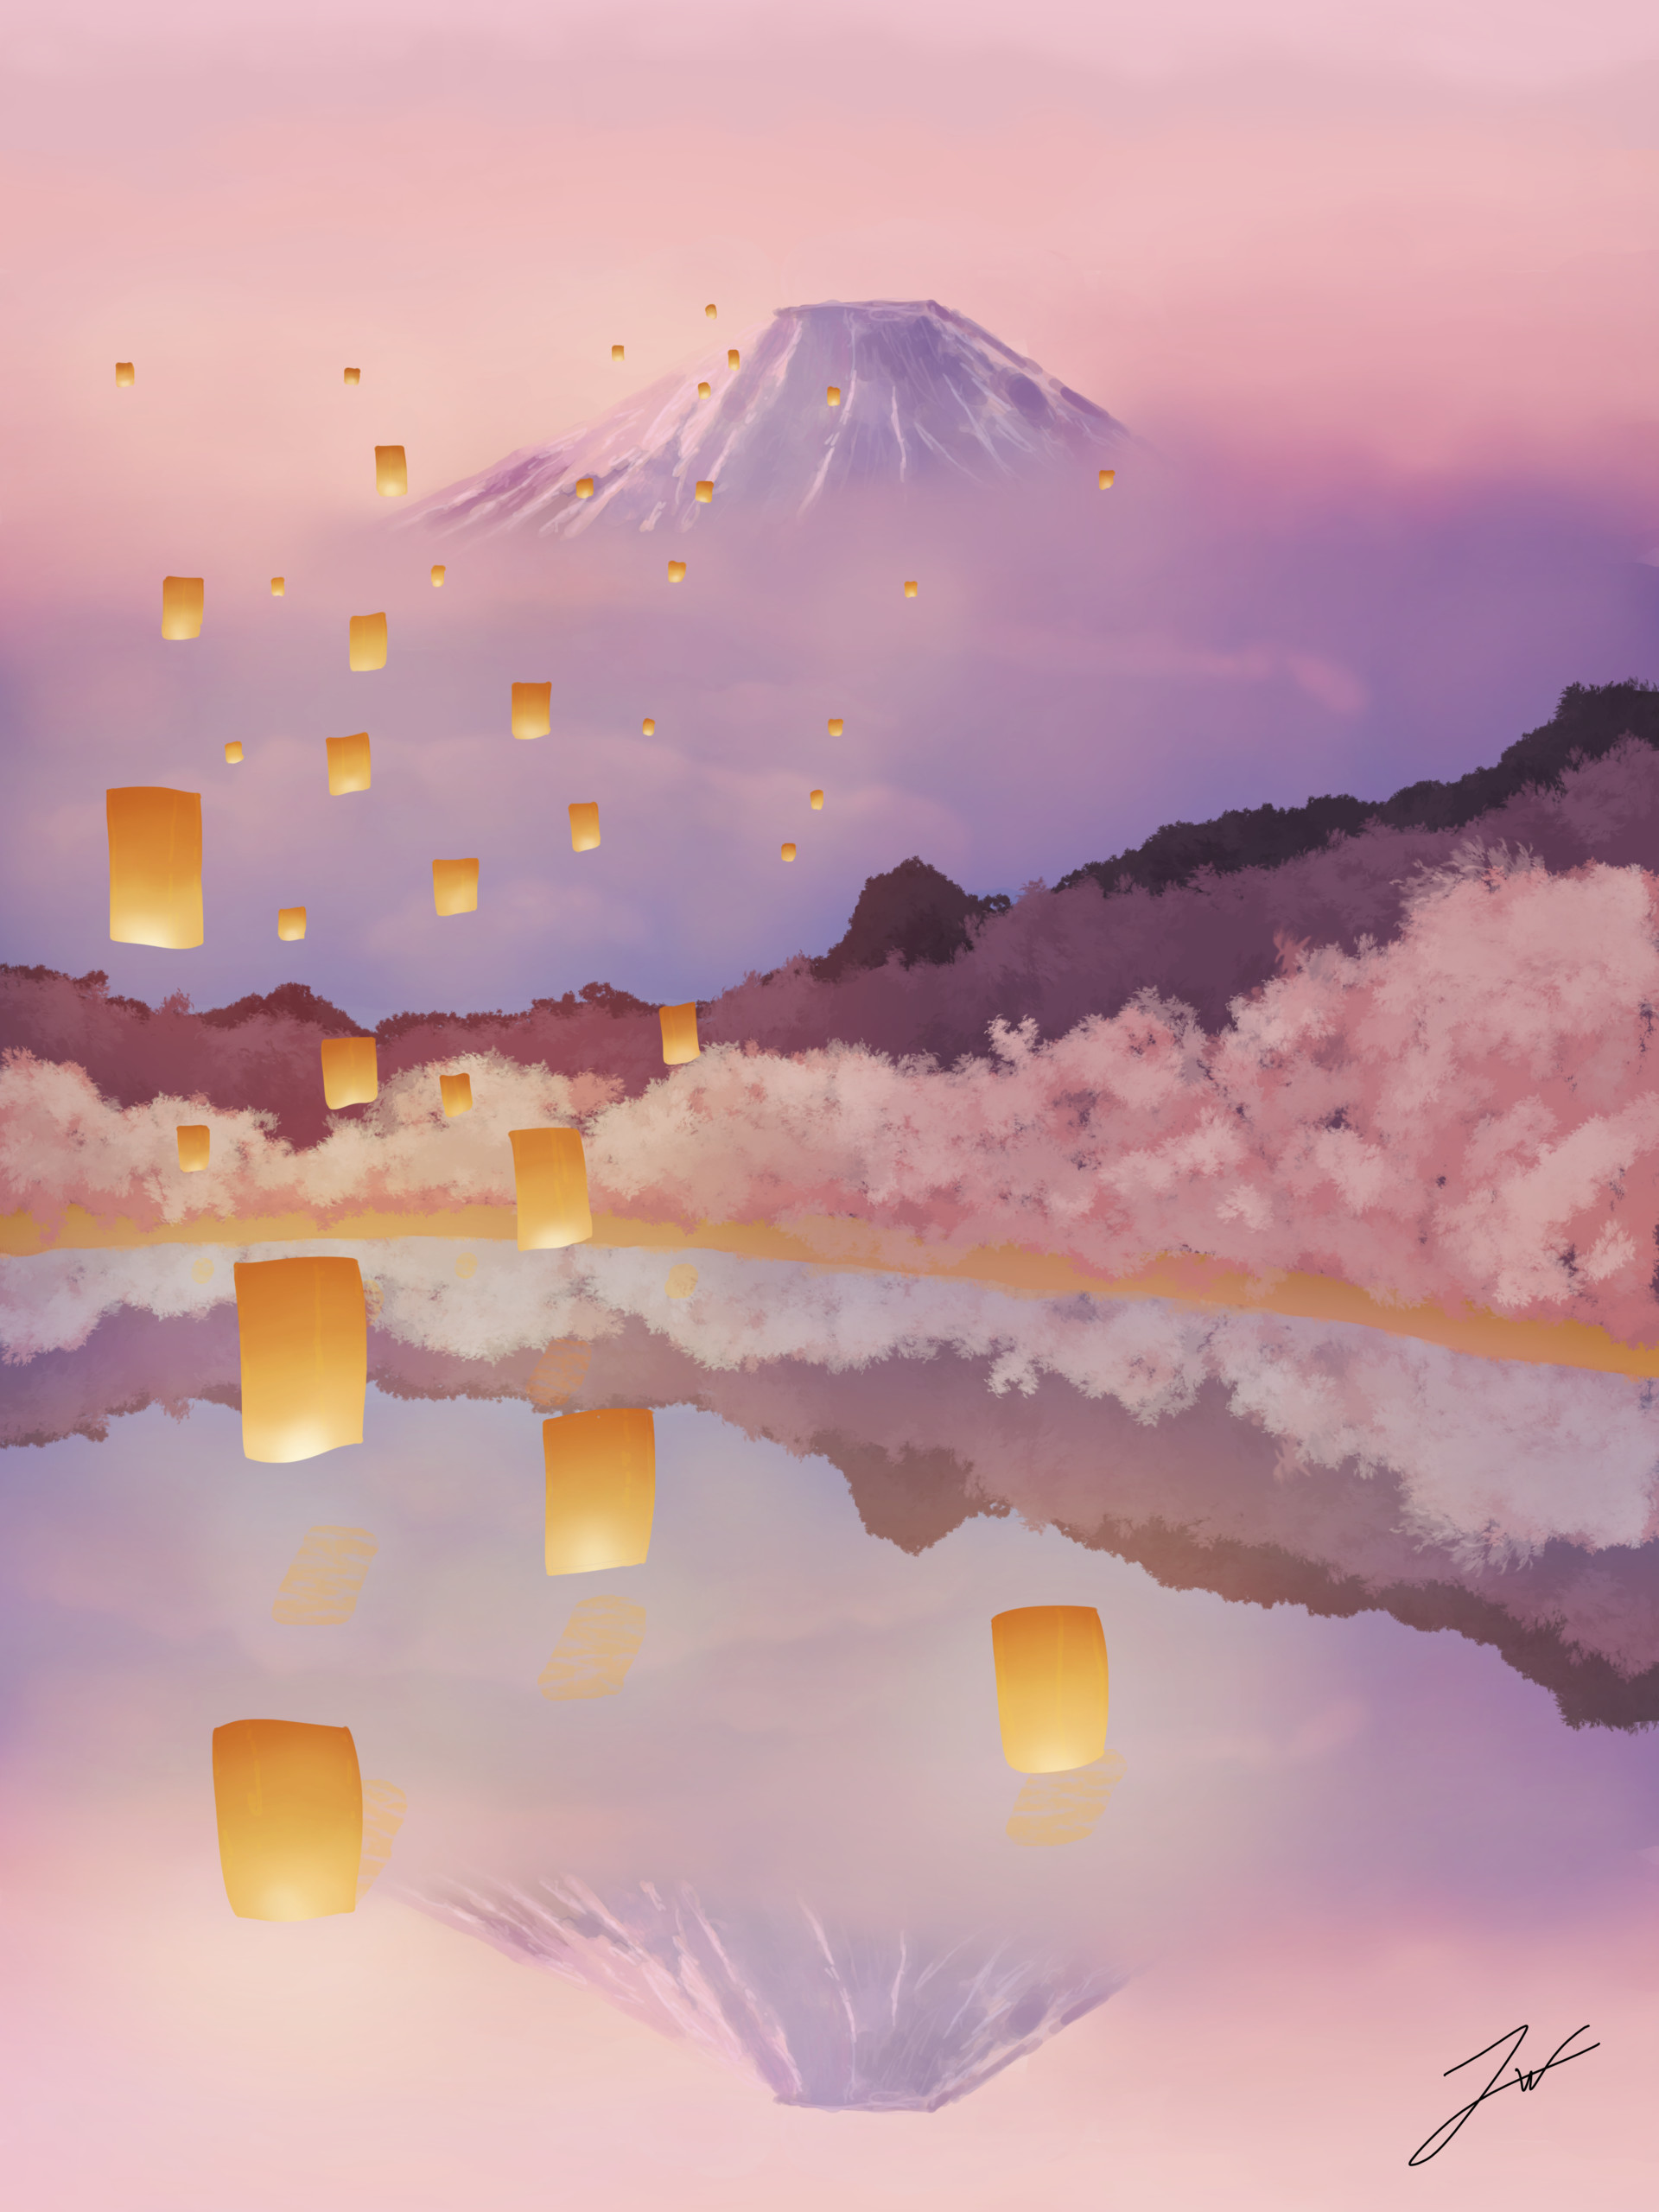  Mount  Fuji  Drawing  at PaintingValley com Explore 